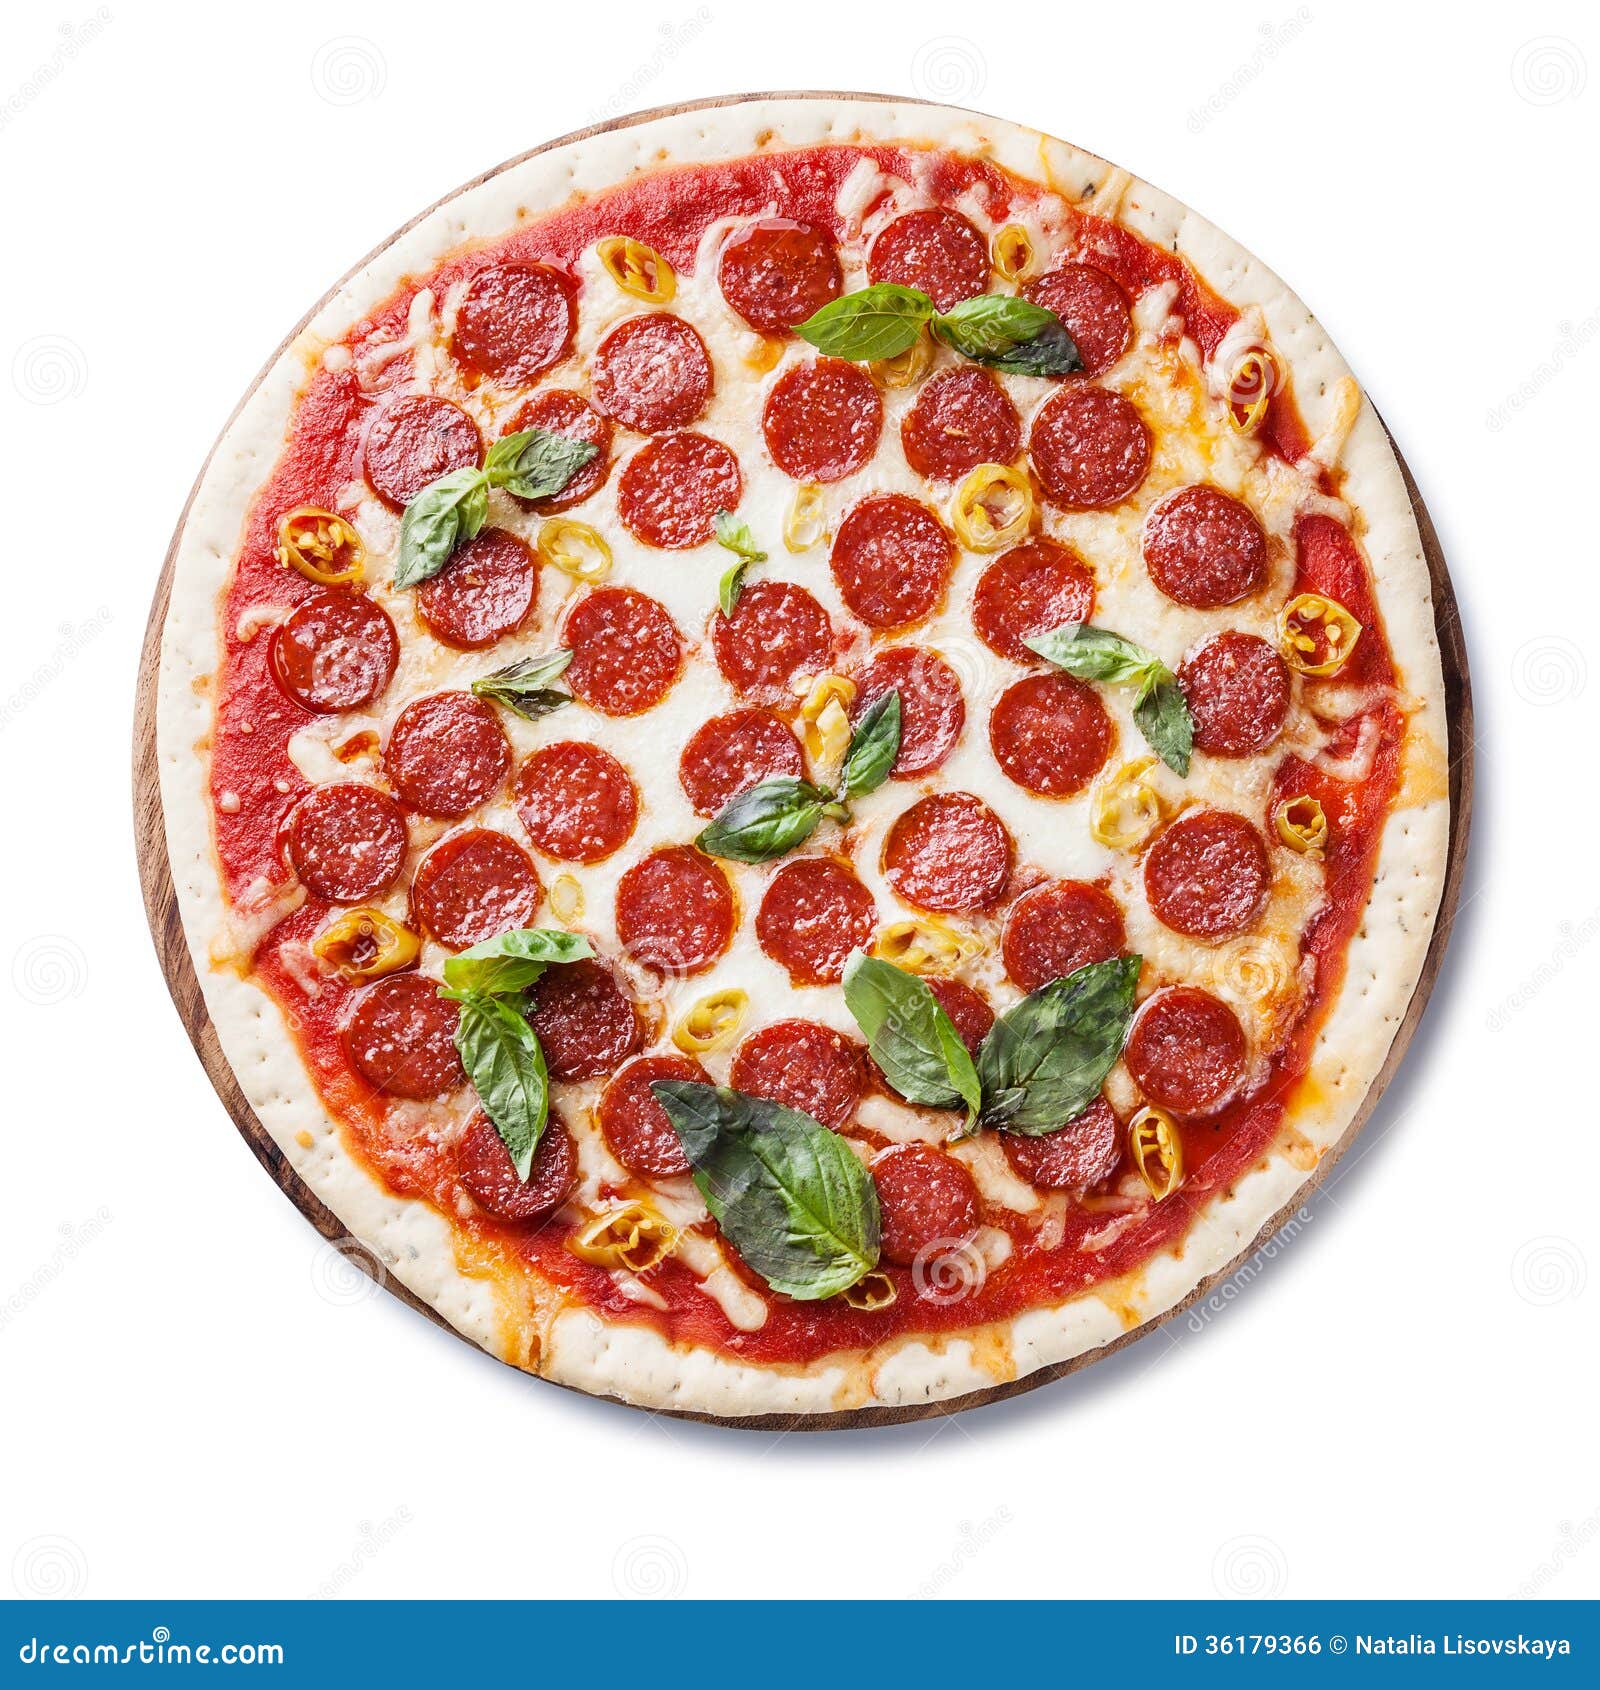 пепперони пицца фото на белом фоне фото 36